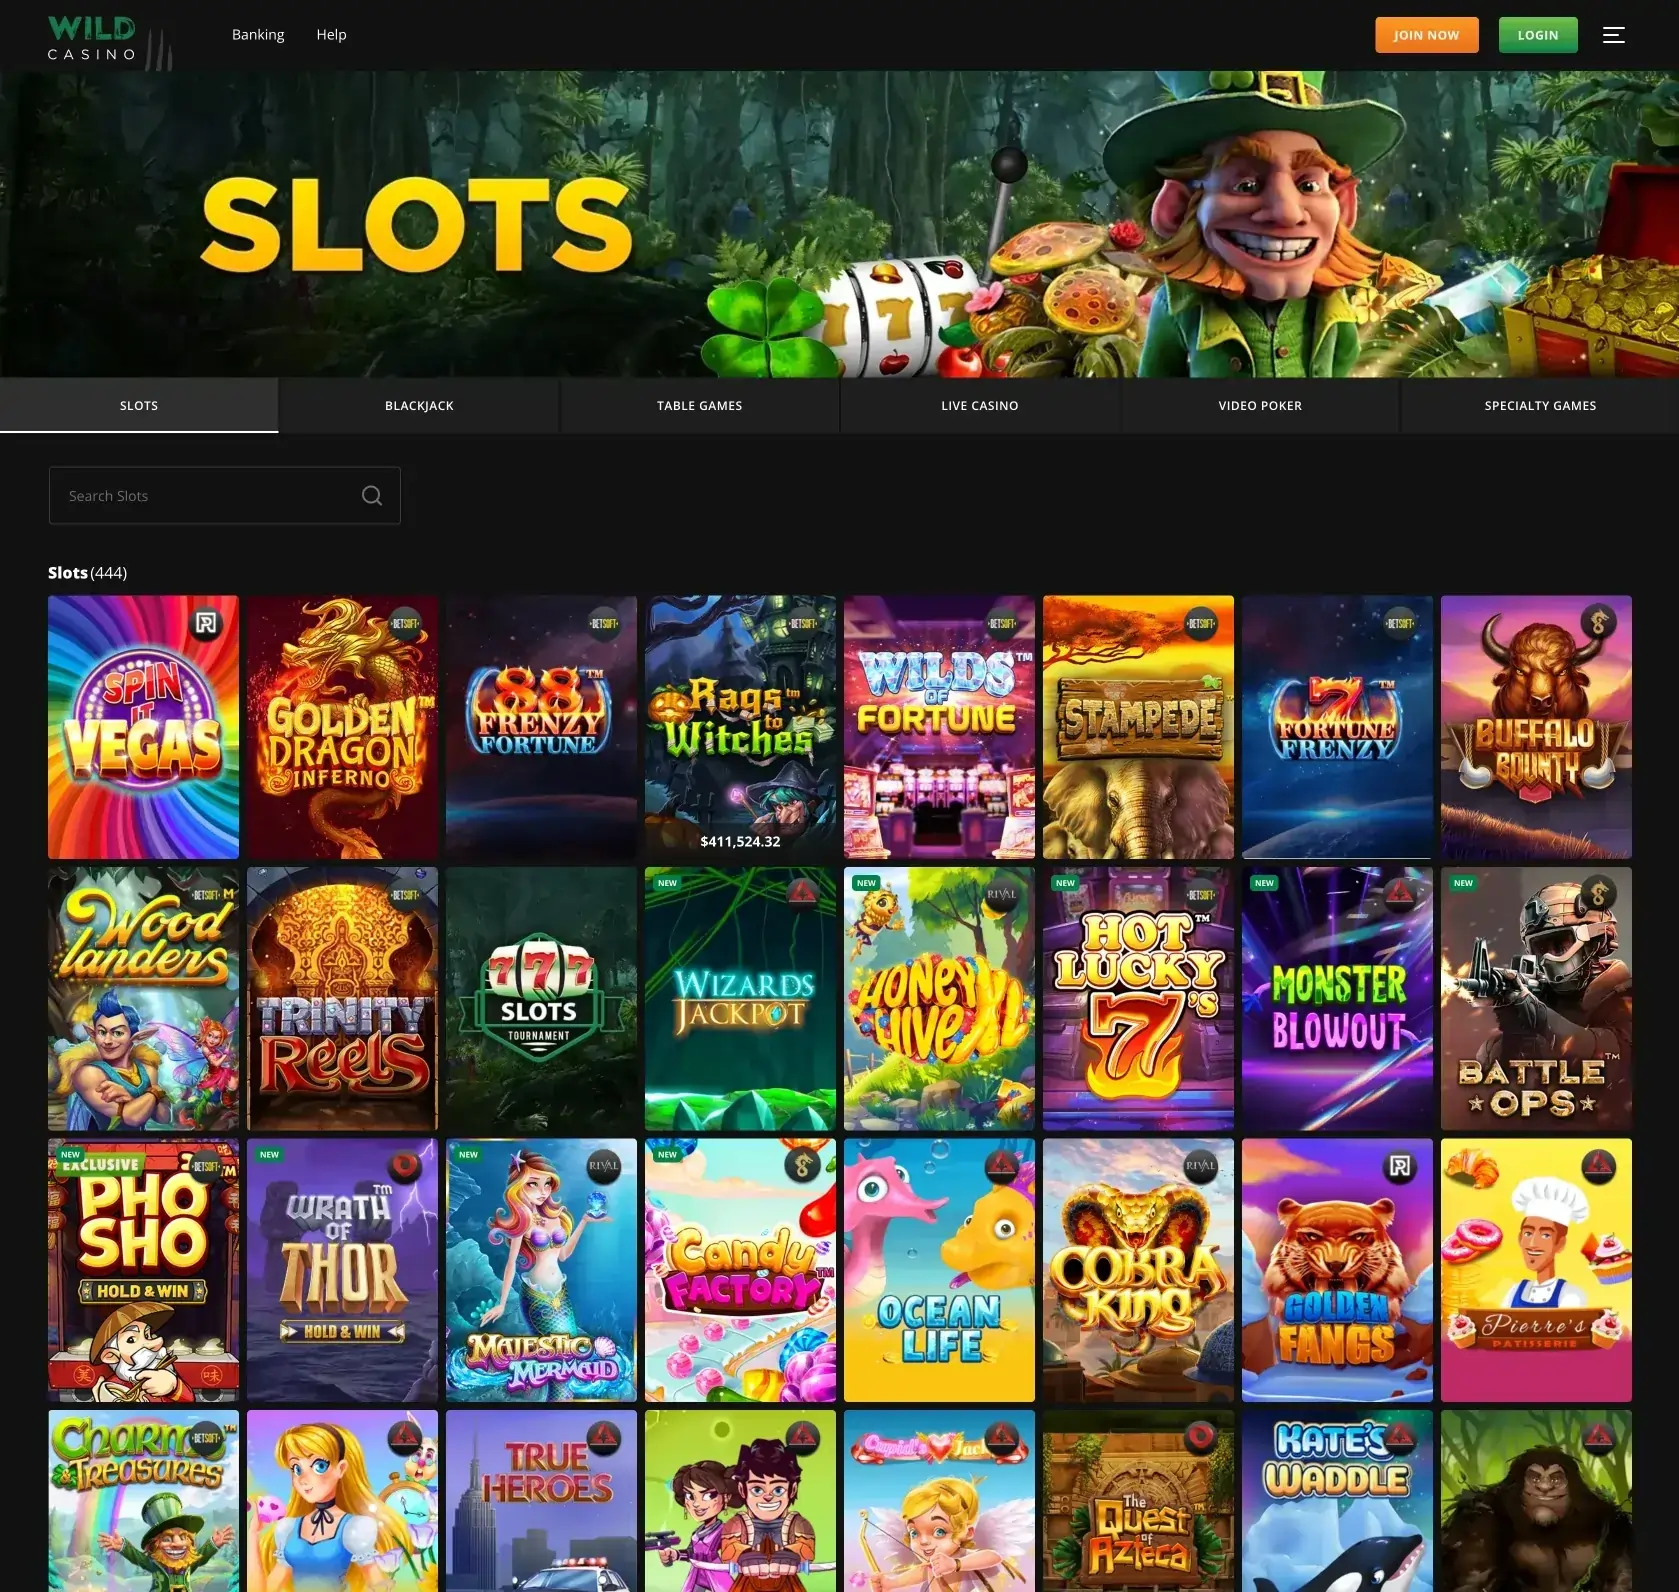 Wild Casino games & software